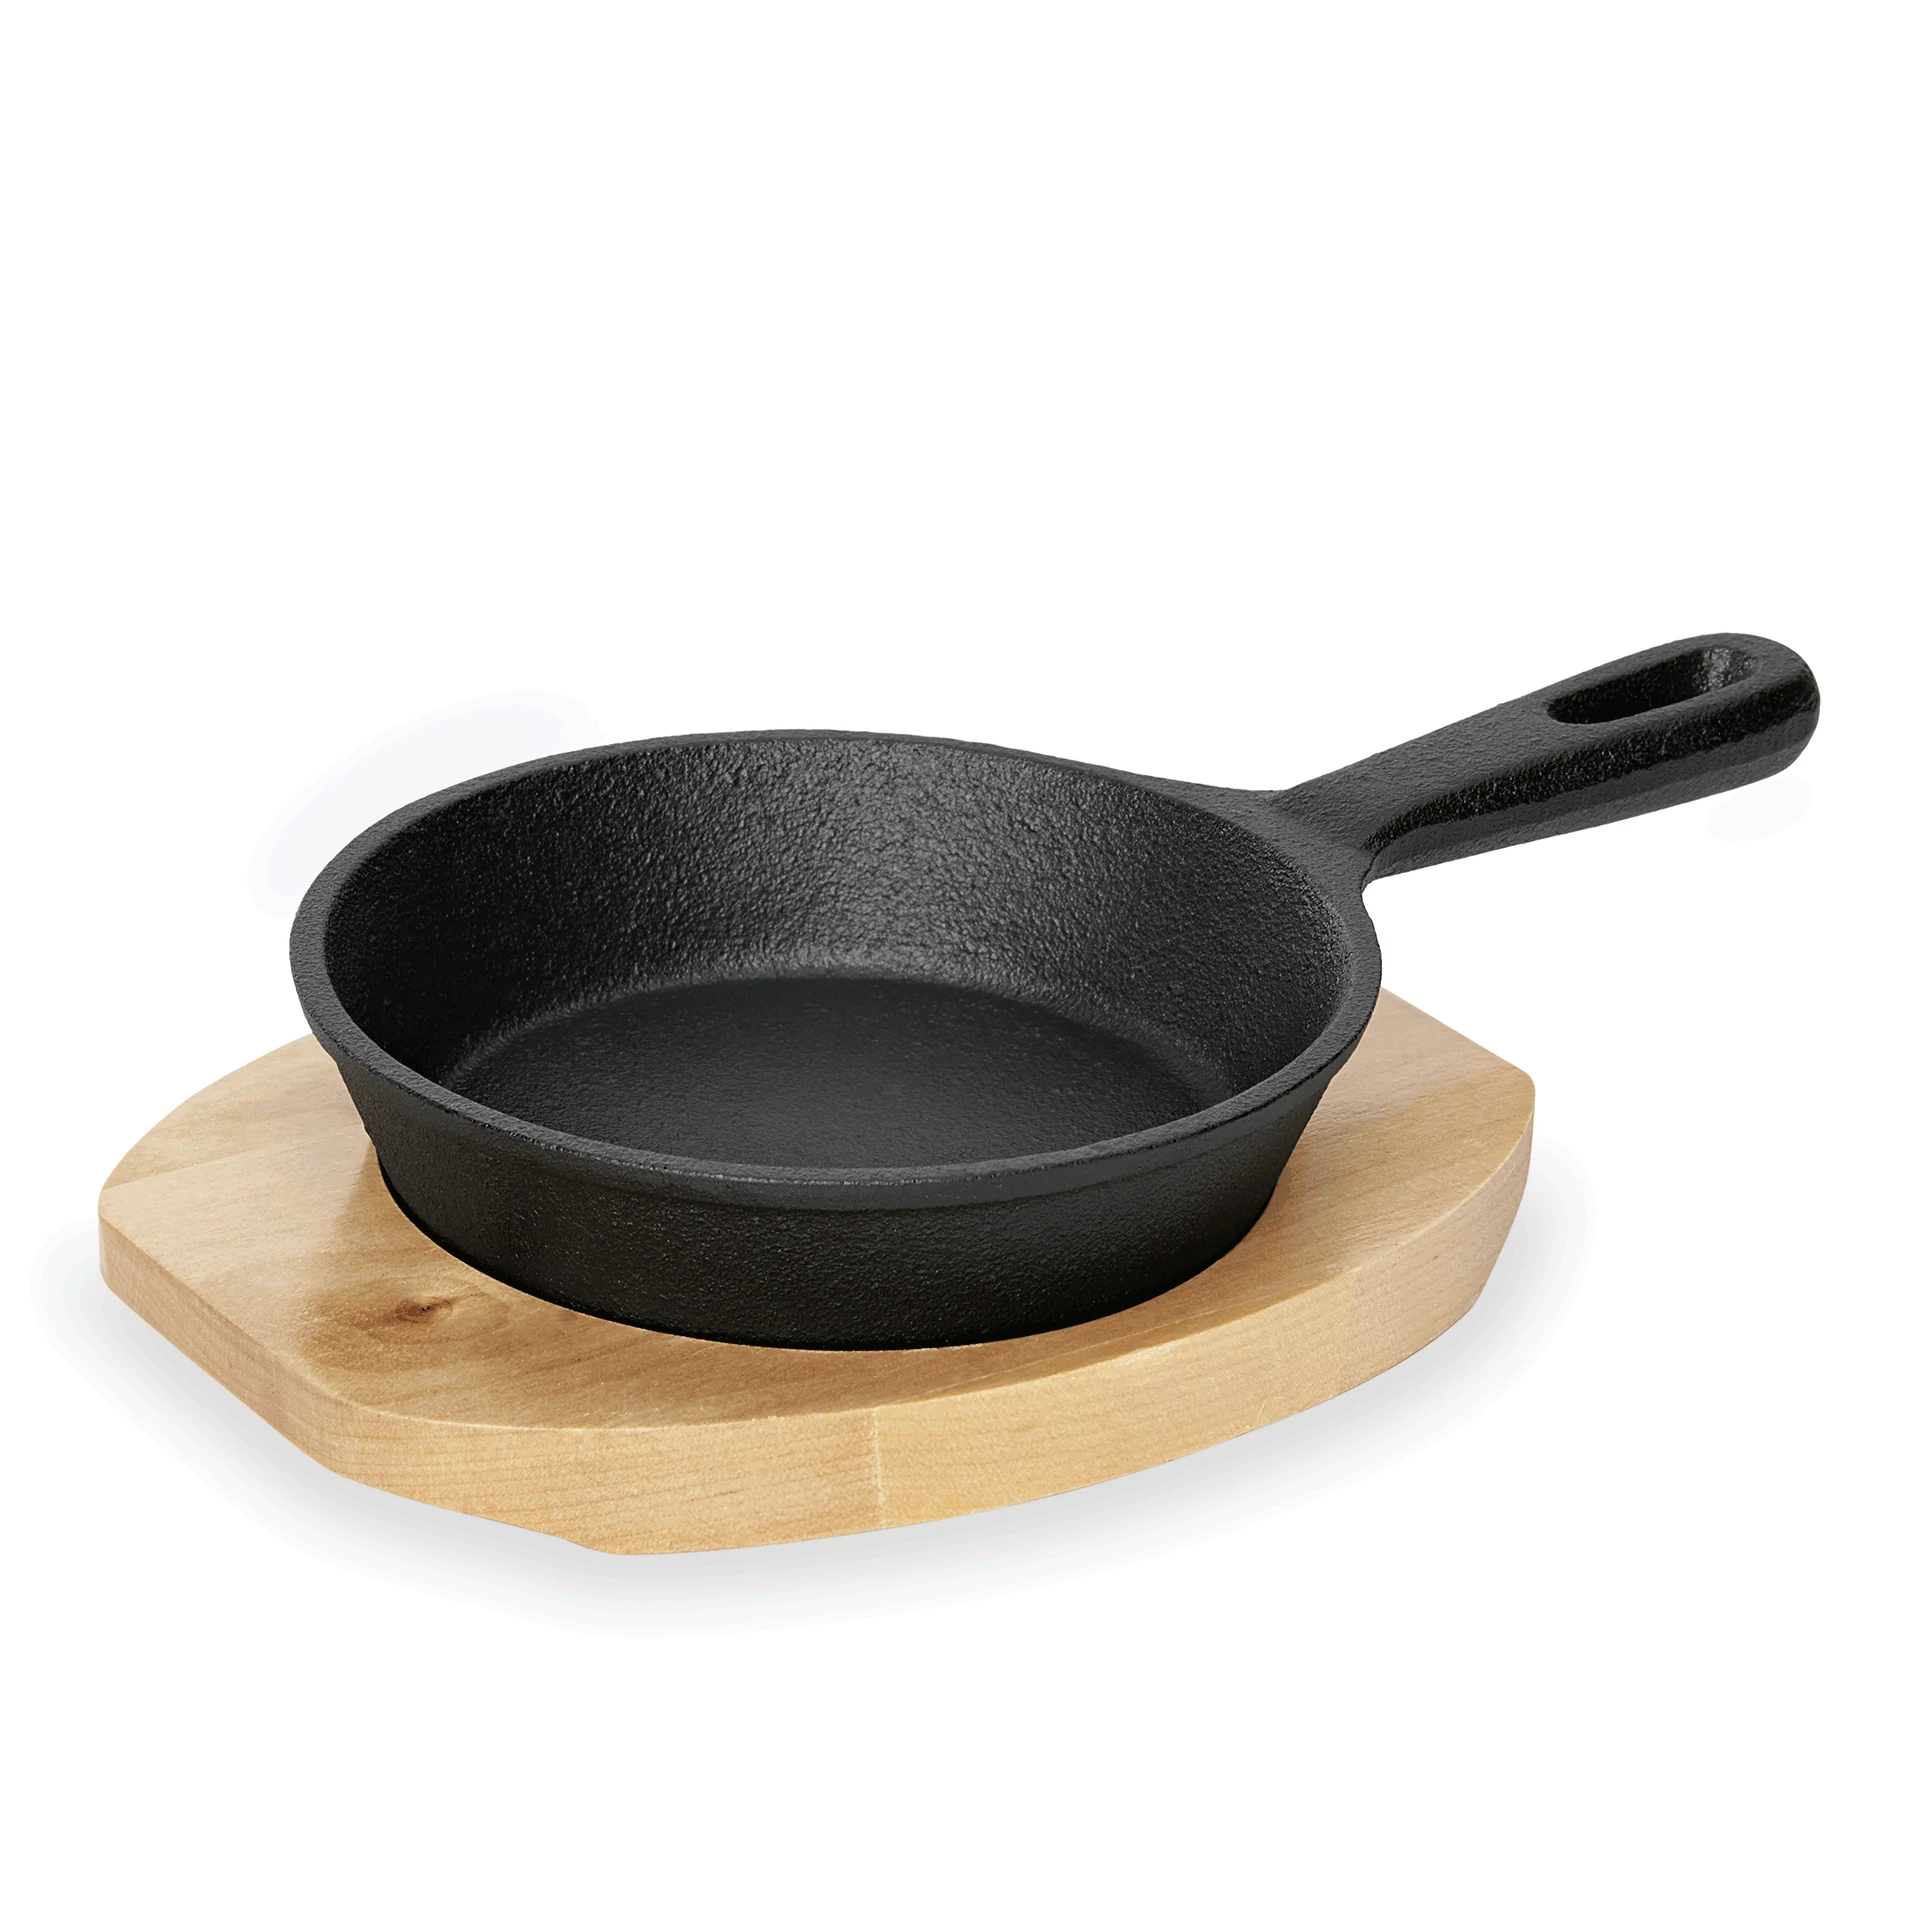 Mini serving pan